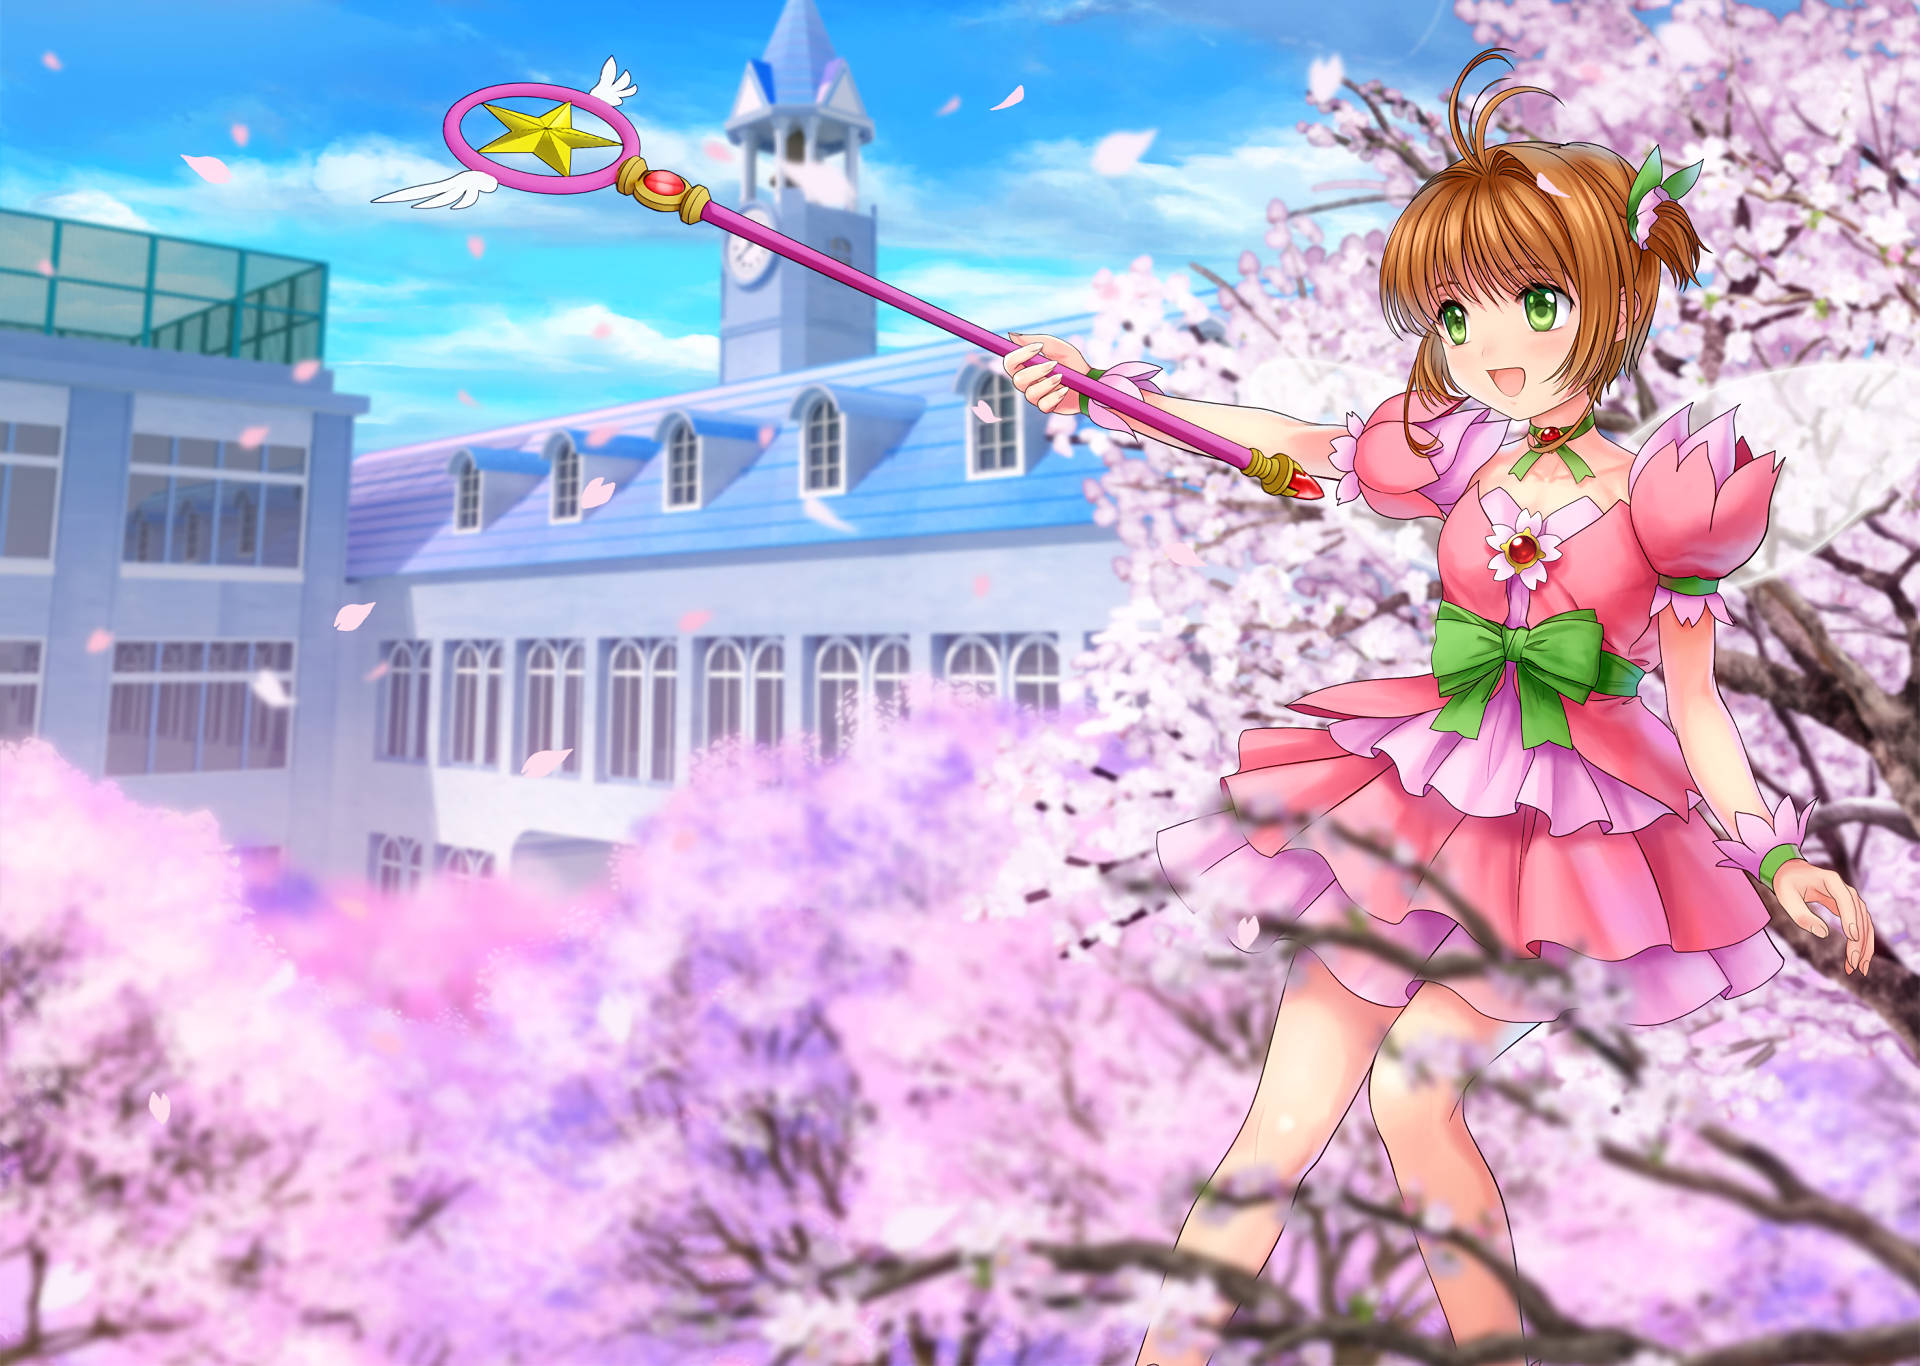 Cardcaptor Sakura Artwork Background